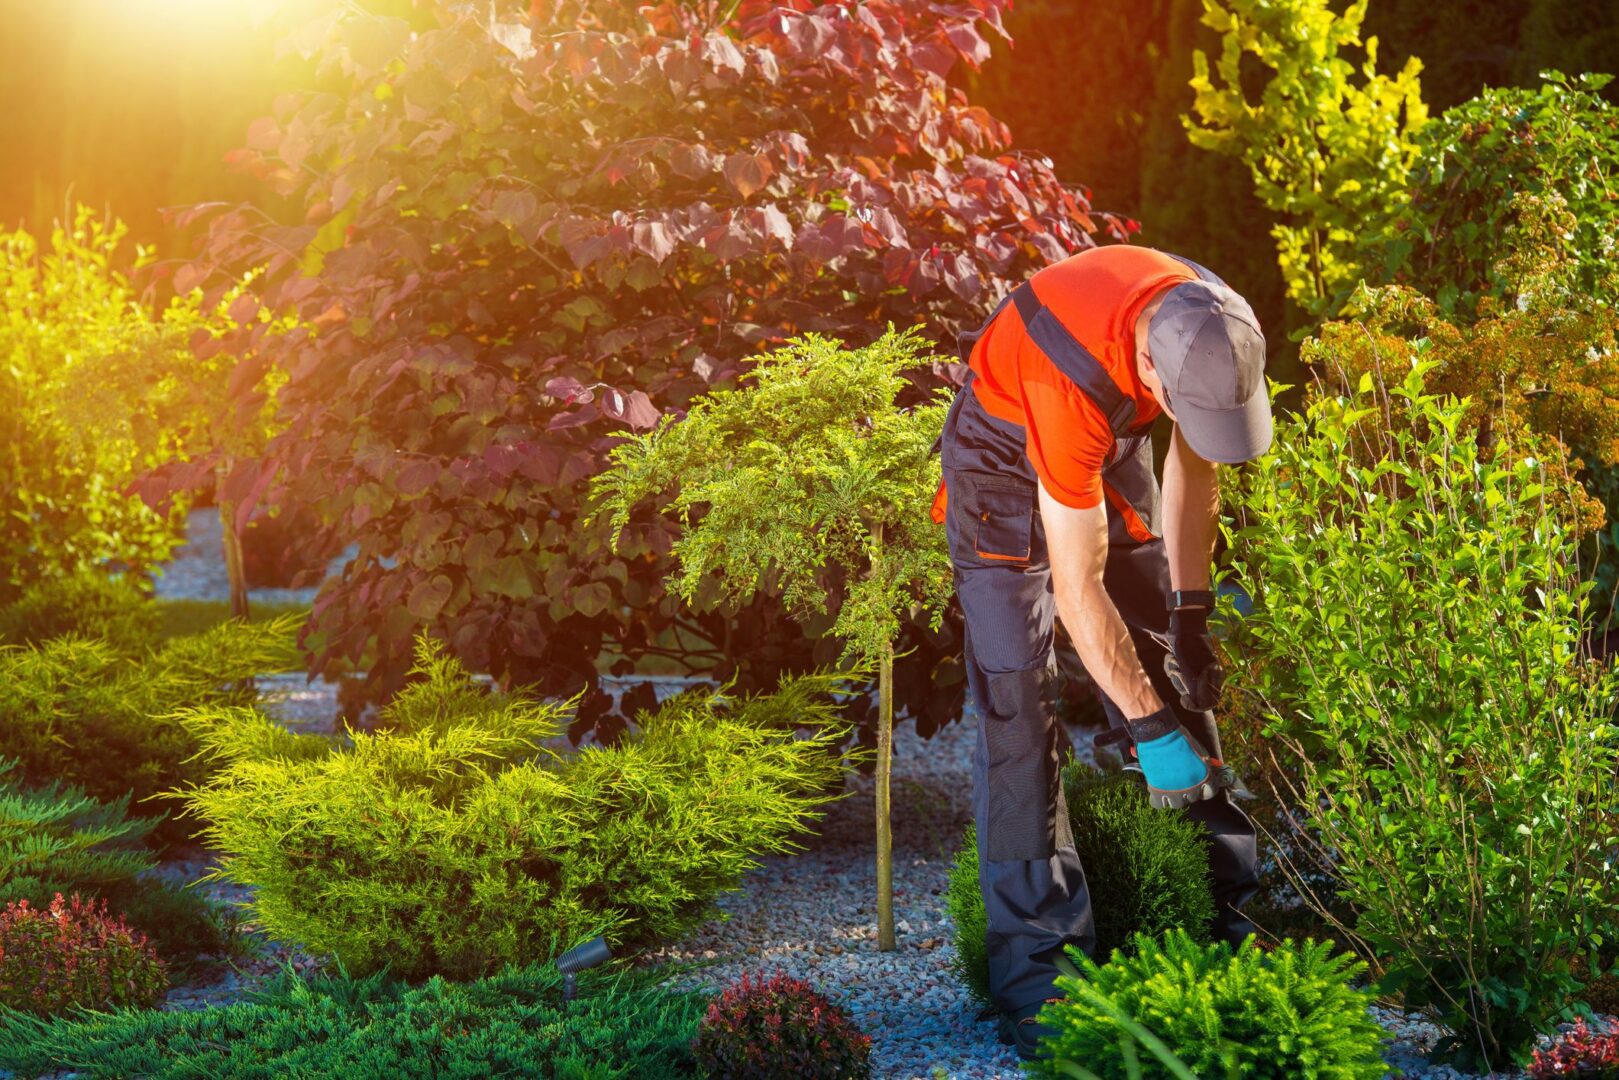 A gardener is trimming bushes in a garden.